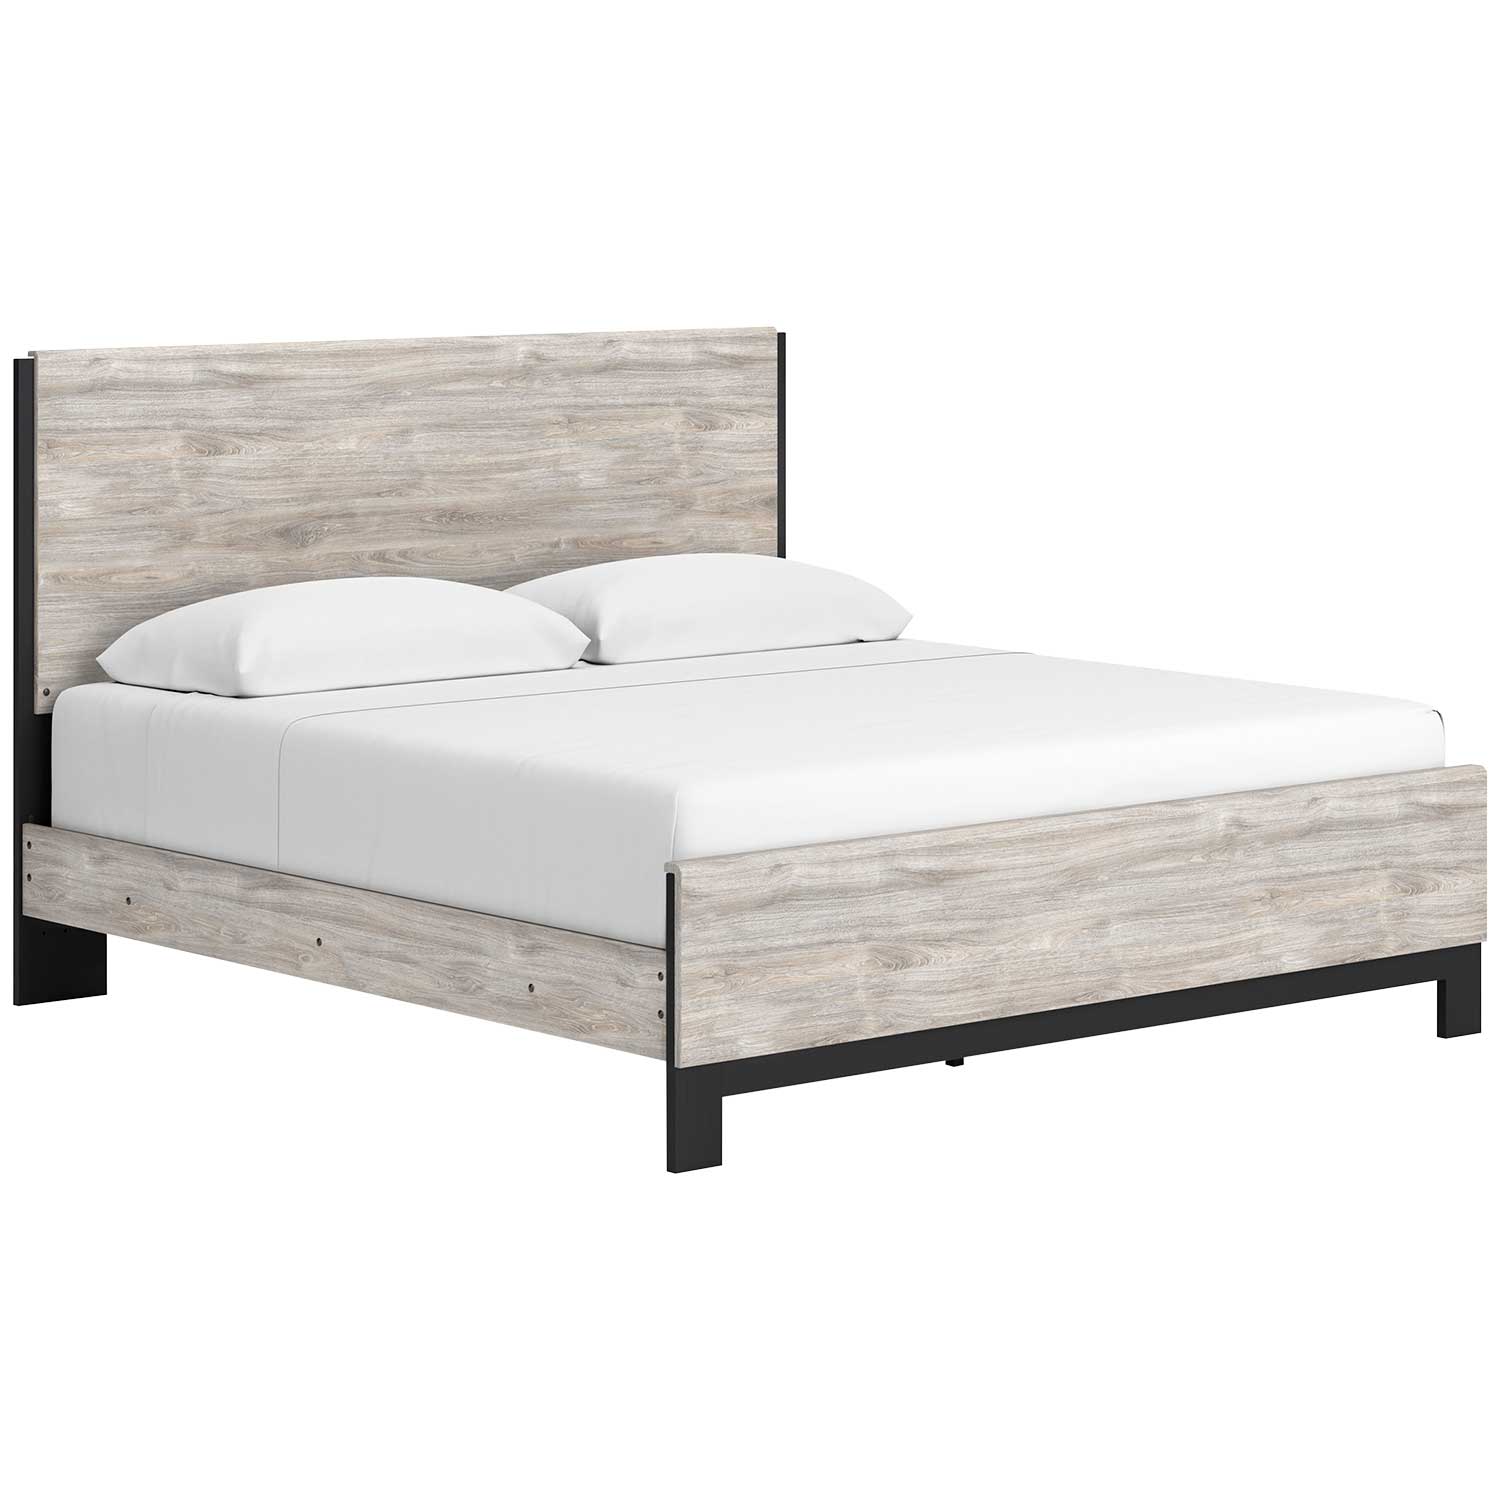 Furniture of America Seboya White King Panel Bed with LED Light